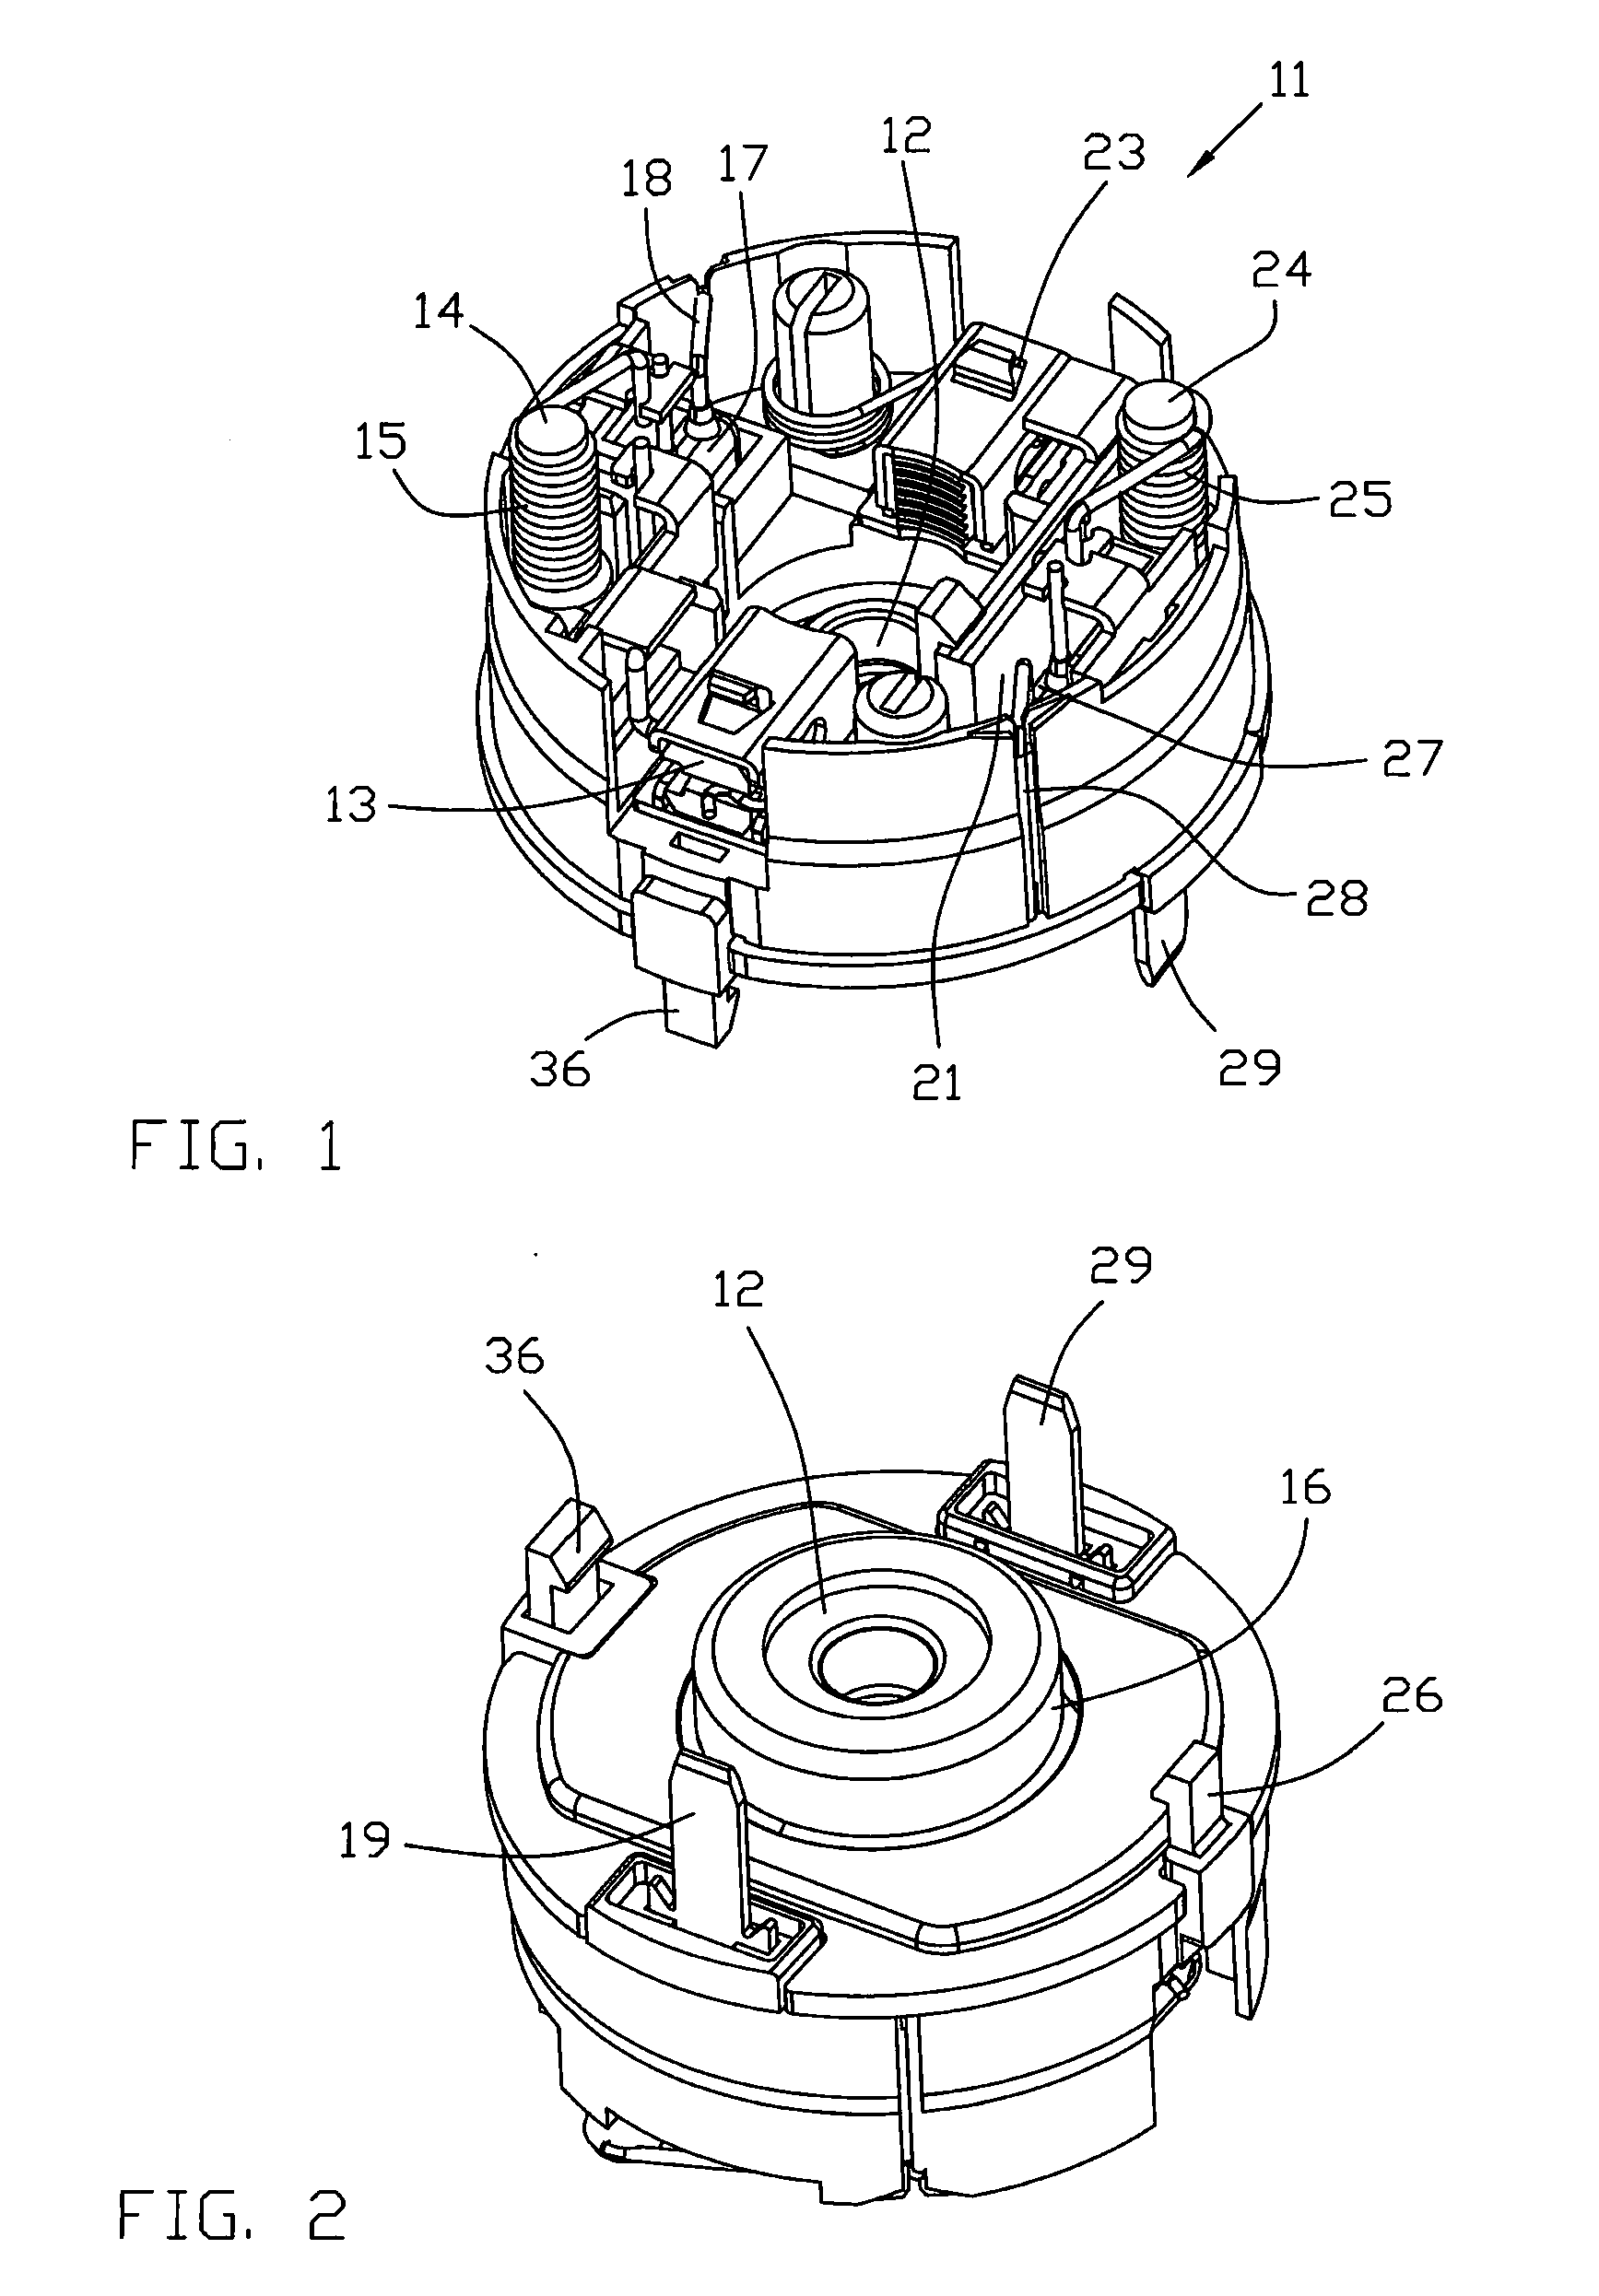 Pmdc motor